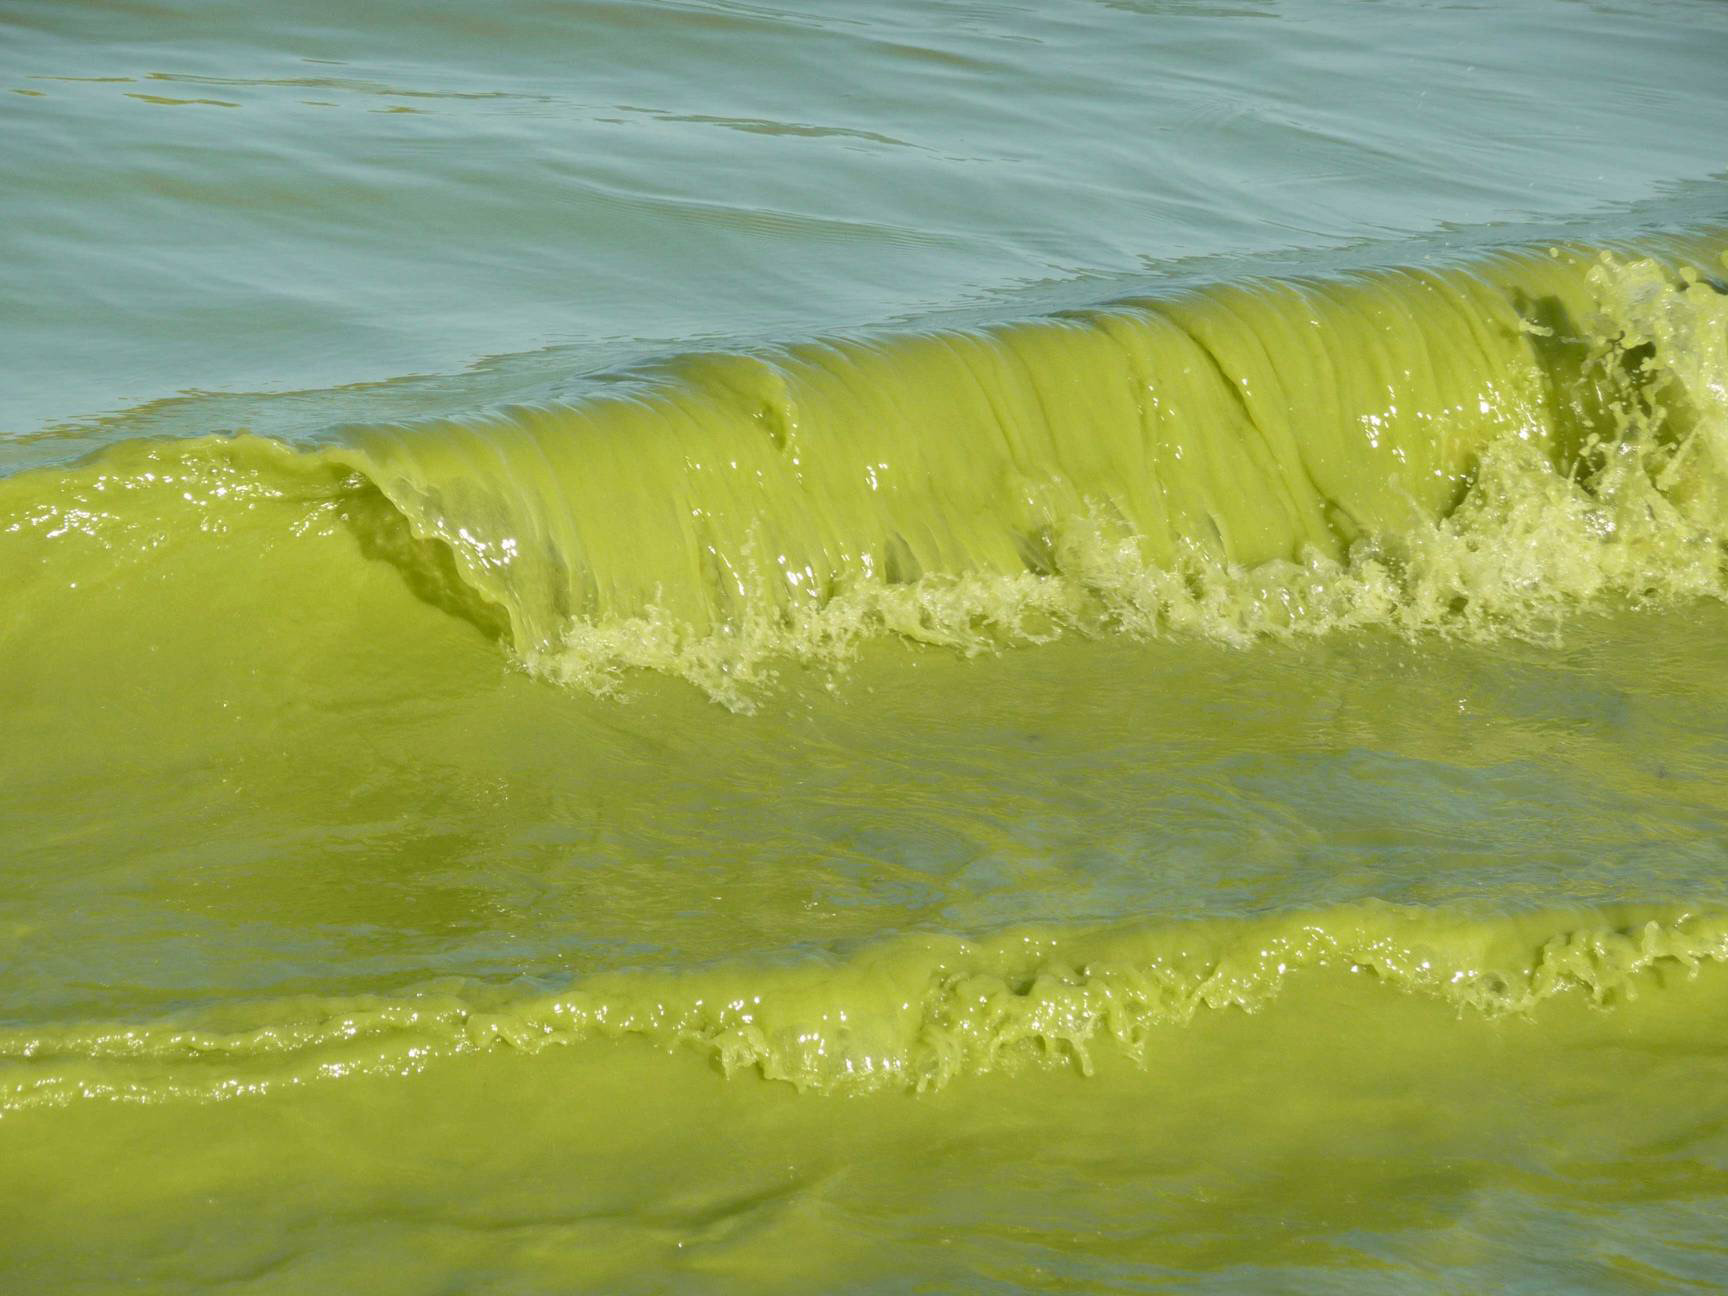 Conservation Community Responds to NOAA’s Lake Erie Algae Bloom Forecast